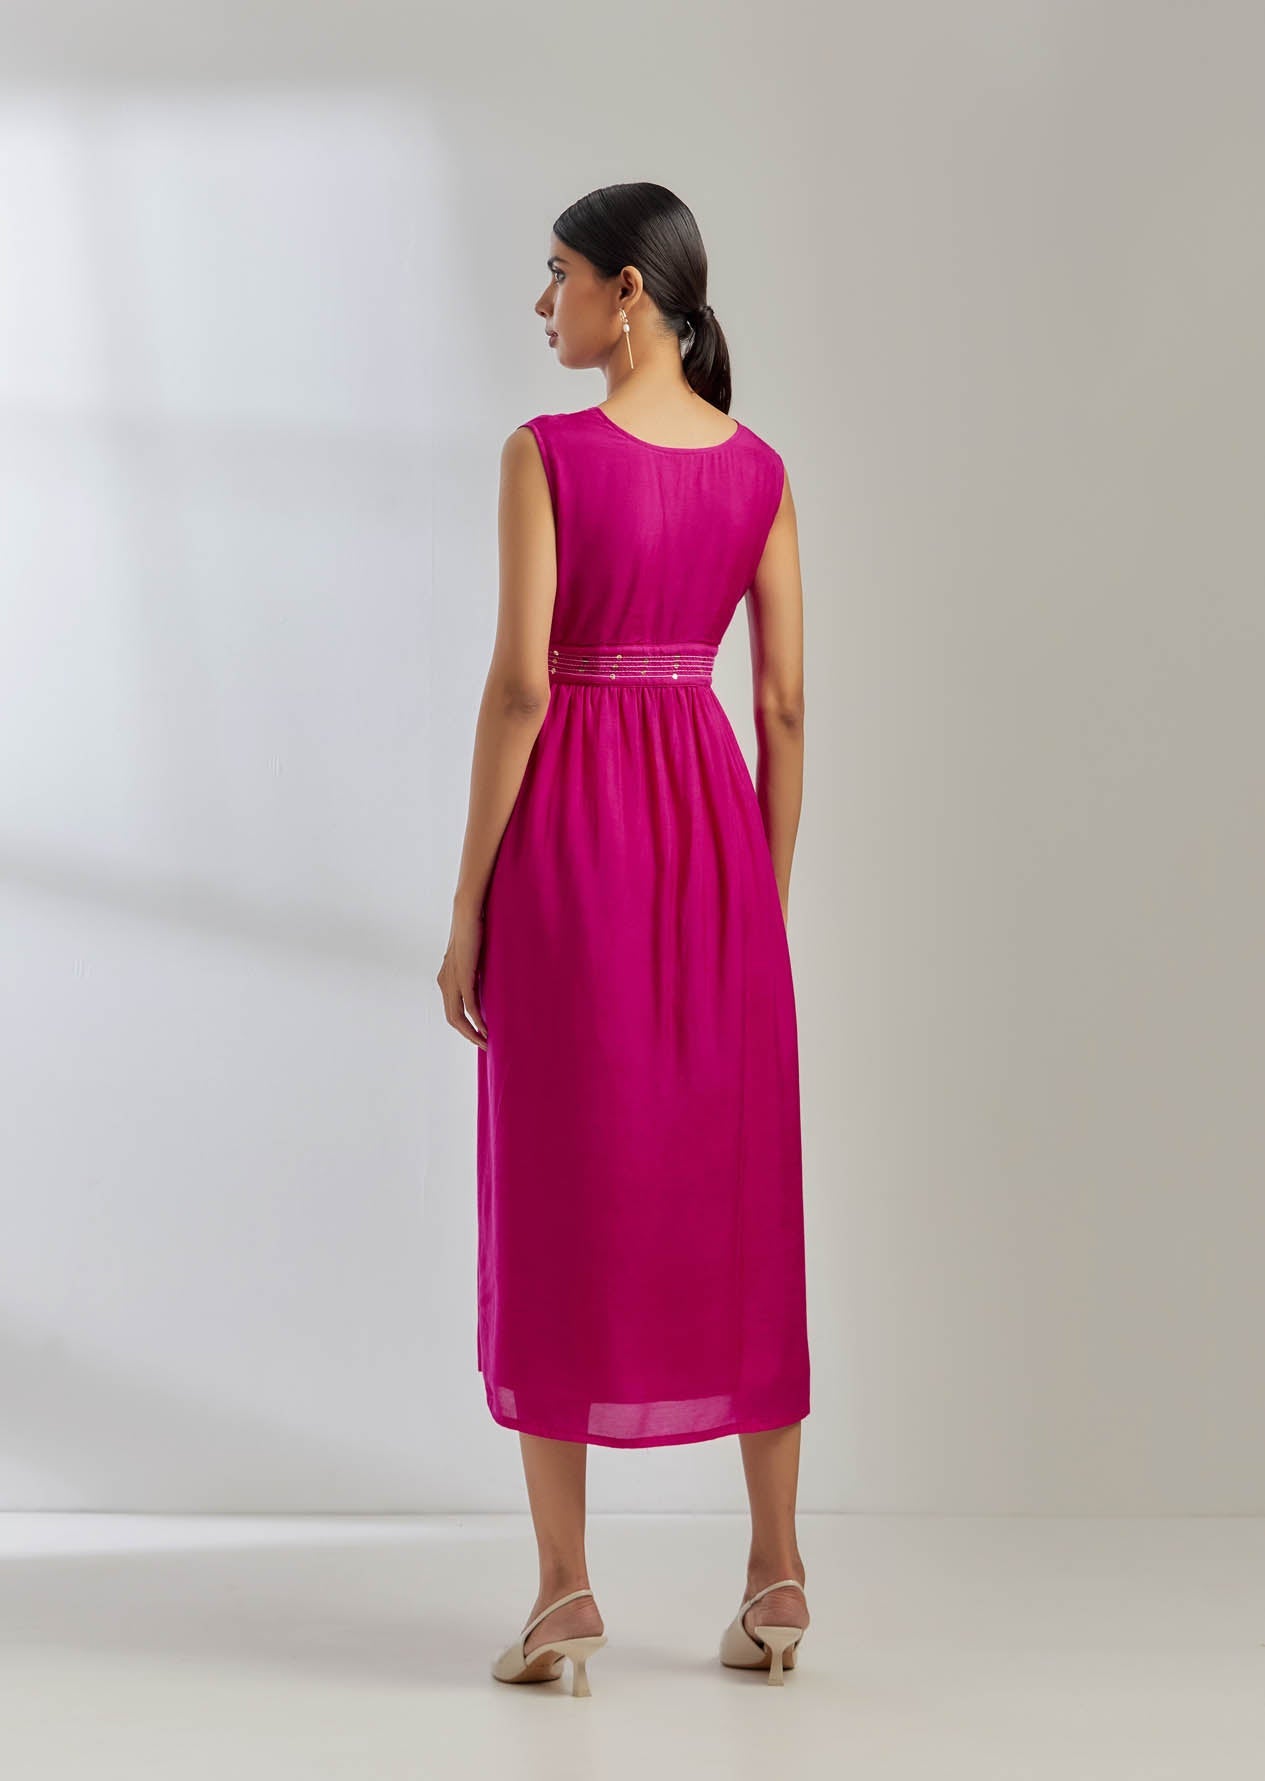 Pink Silk Sirgus Dress - The Indian Cause